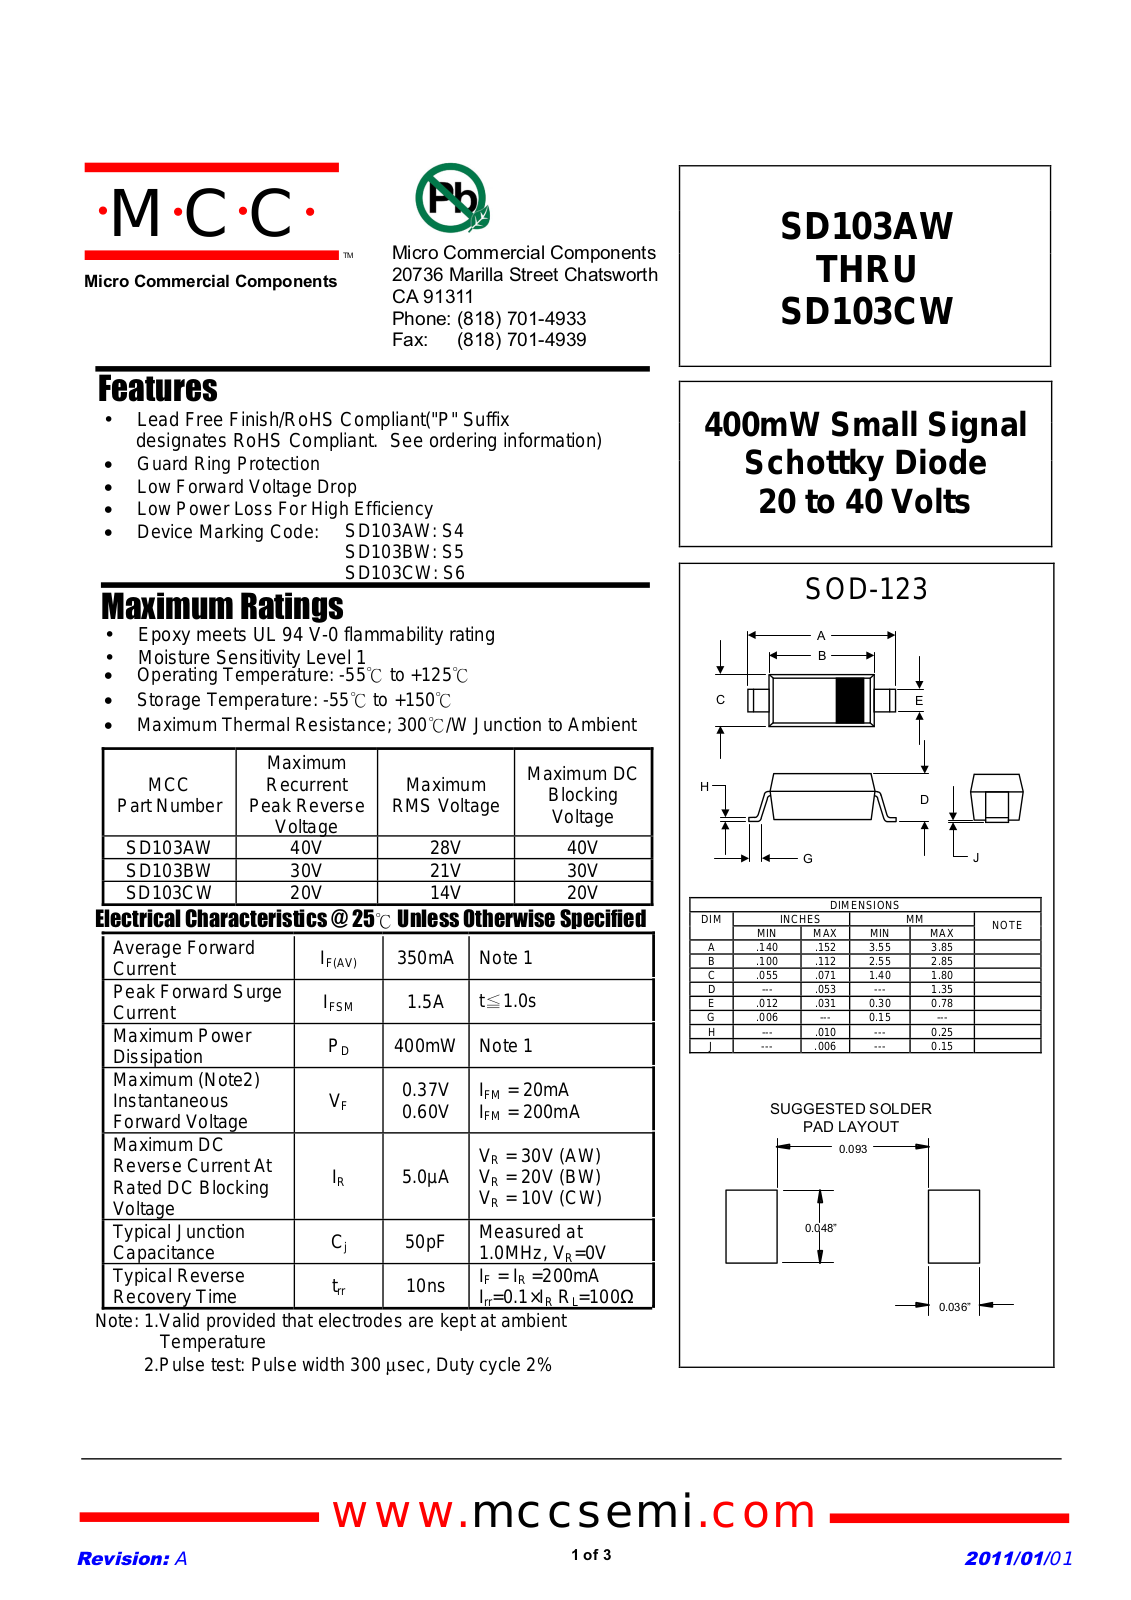 MCC SD103AW, SD103BW, SD103CW Schematic